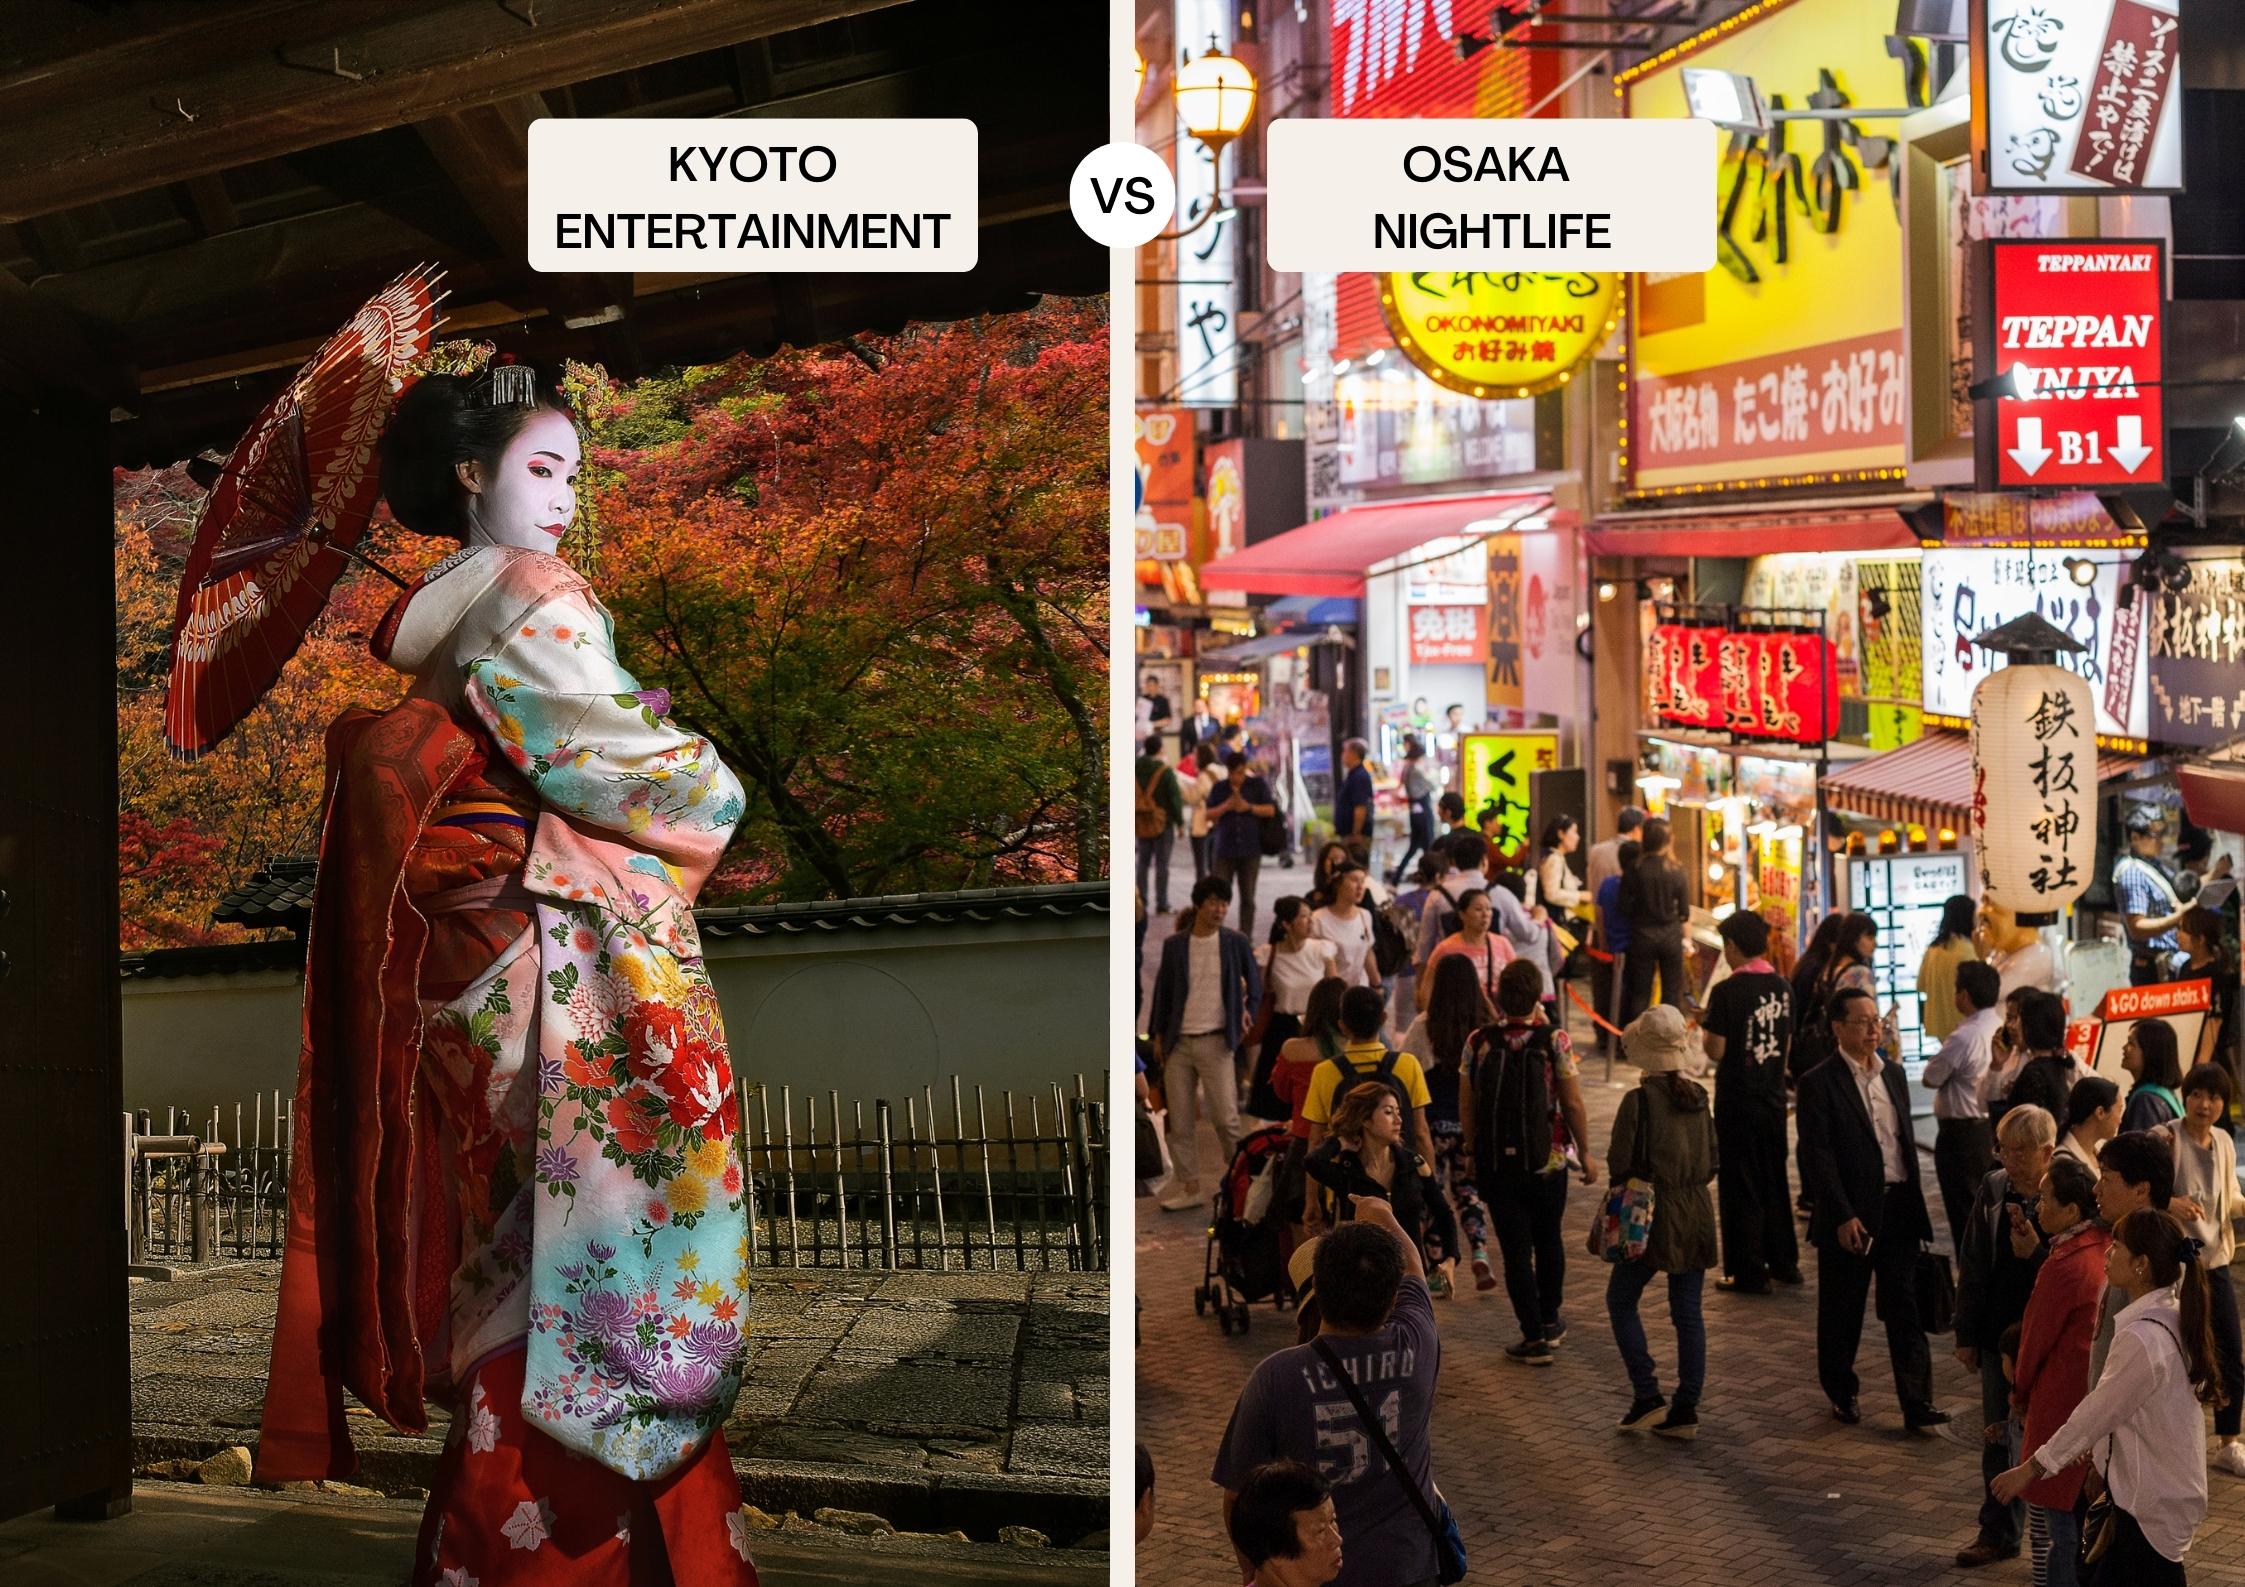 Tokyo vs Osaka for entertainment and nightlife